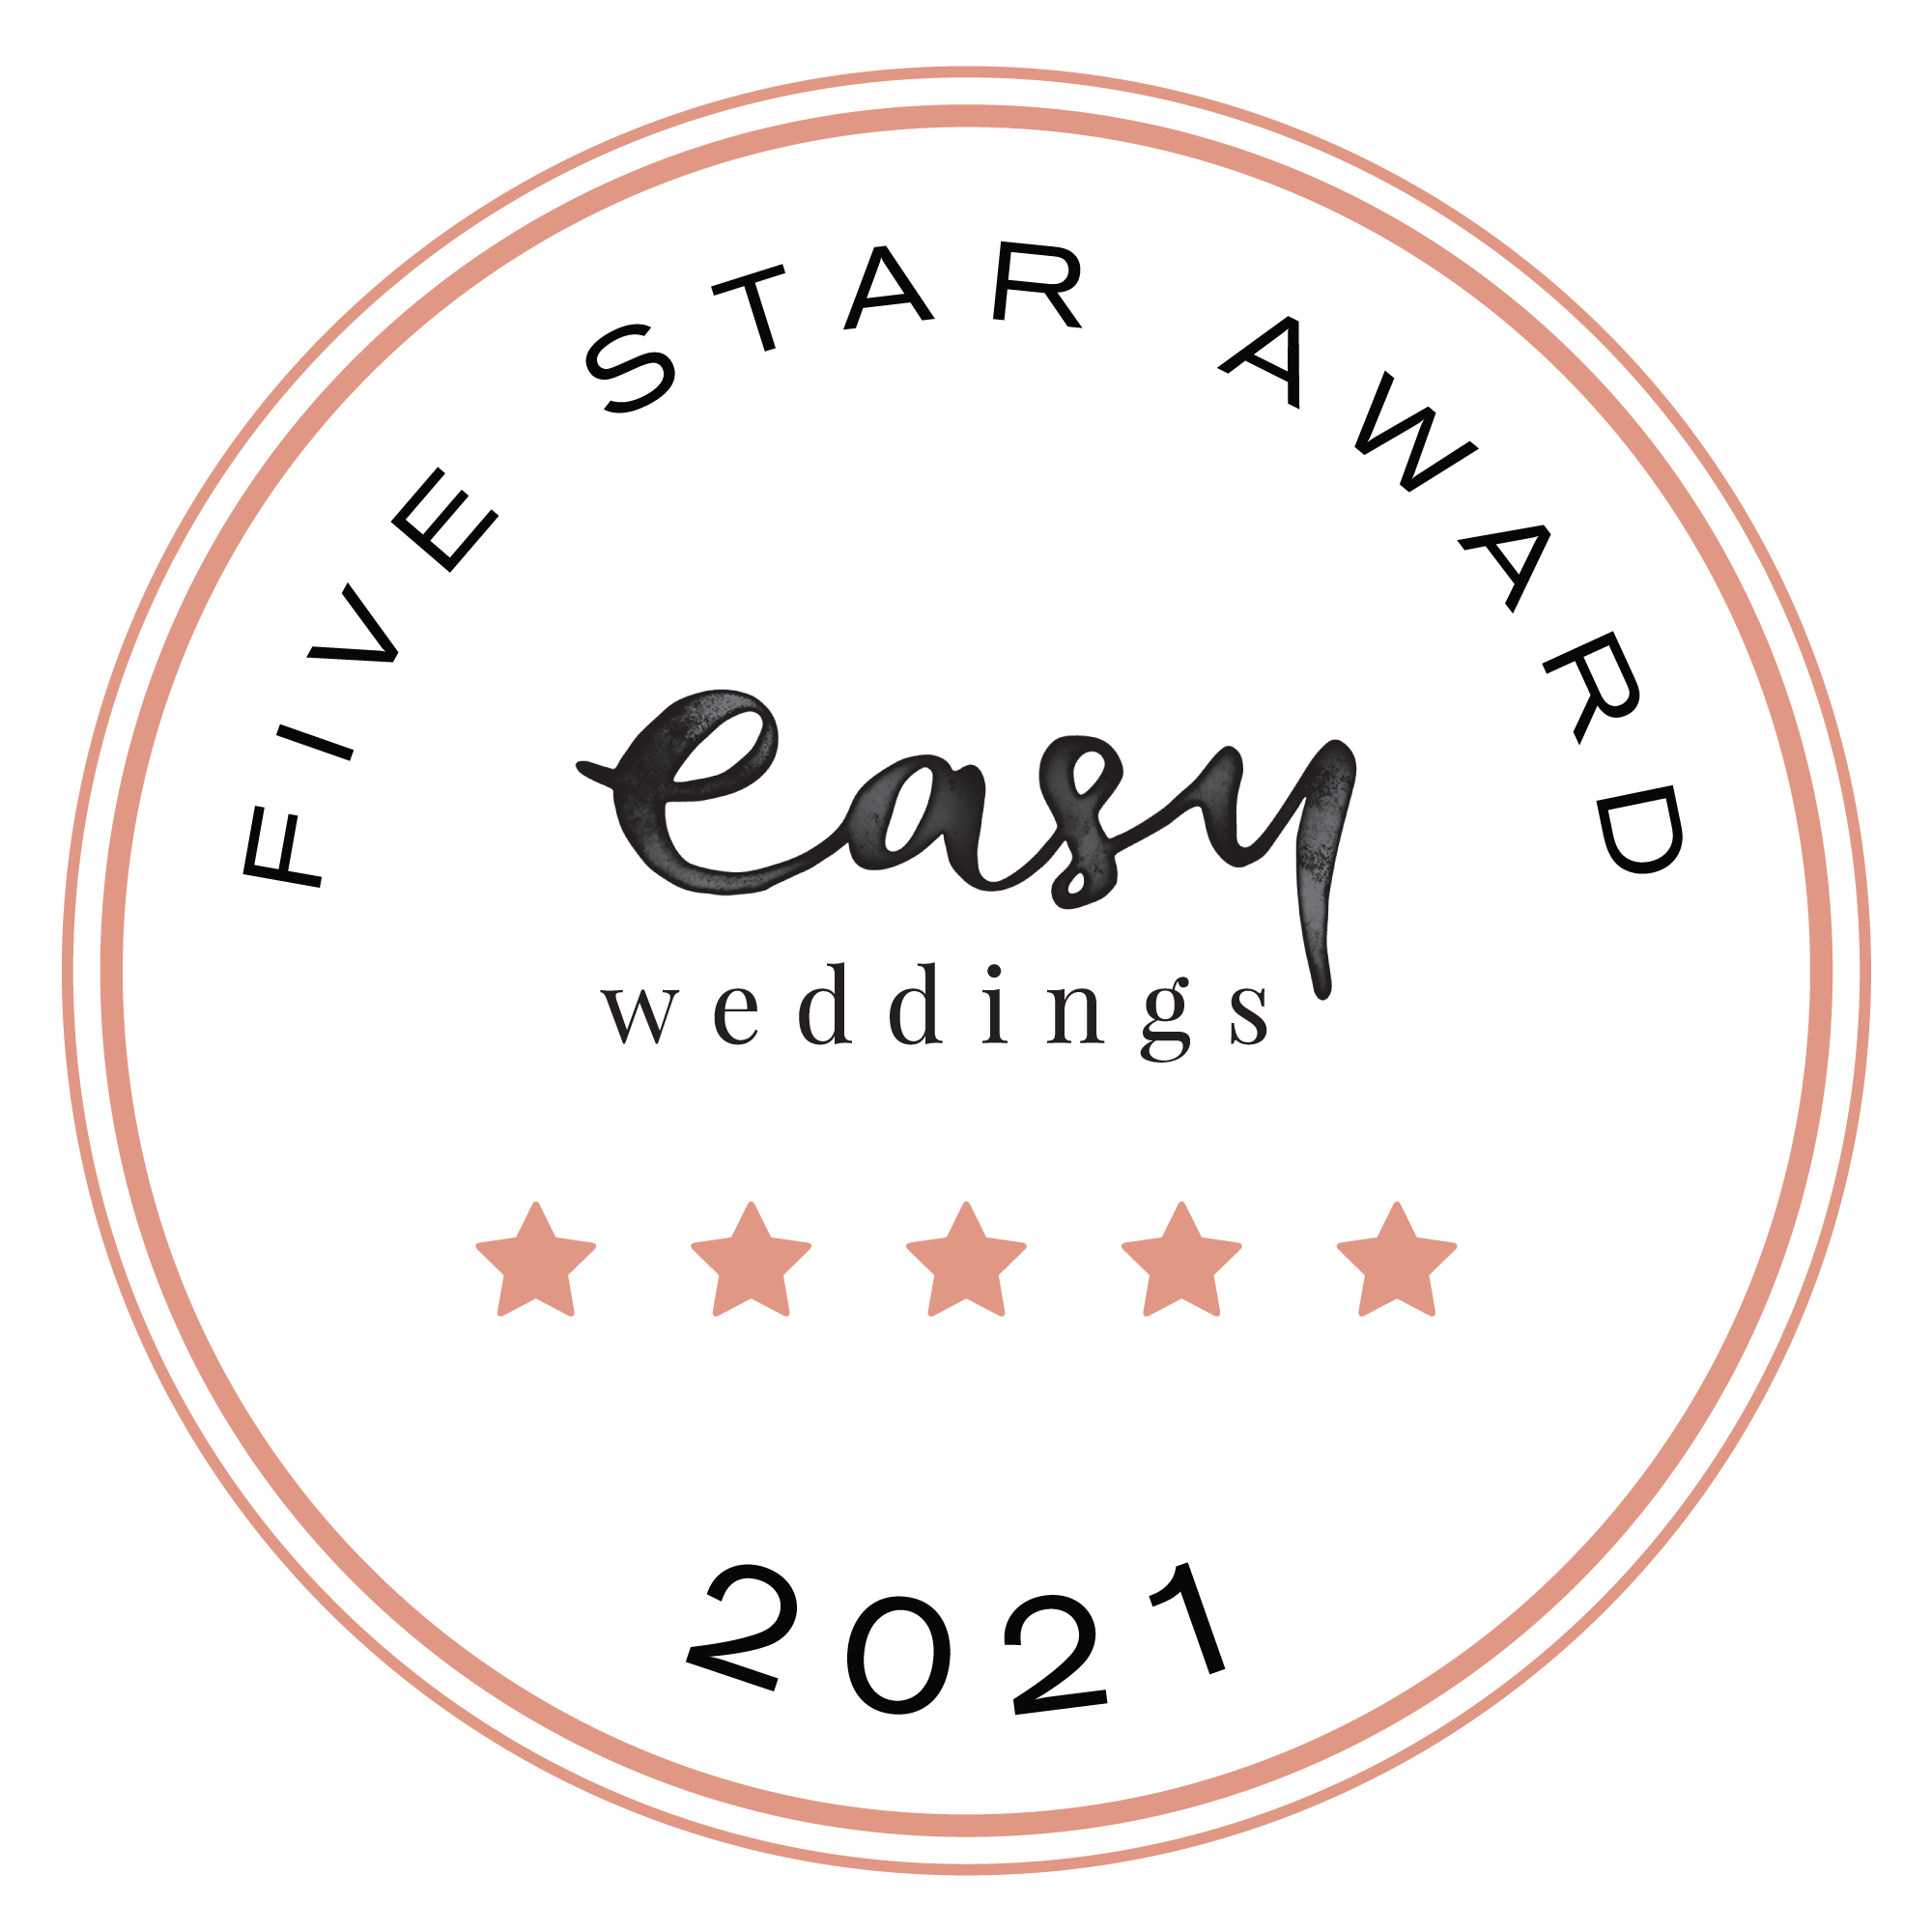 easy-wedding-5-star-award-2021.png